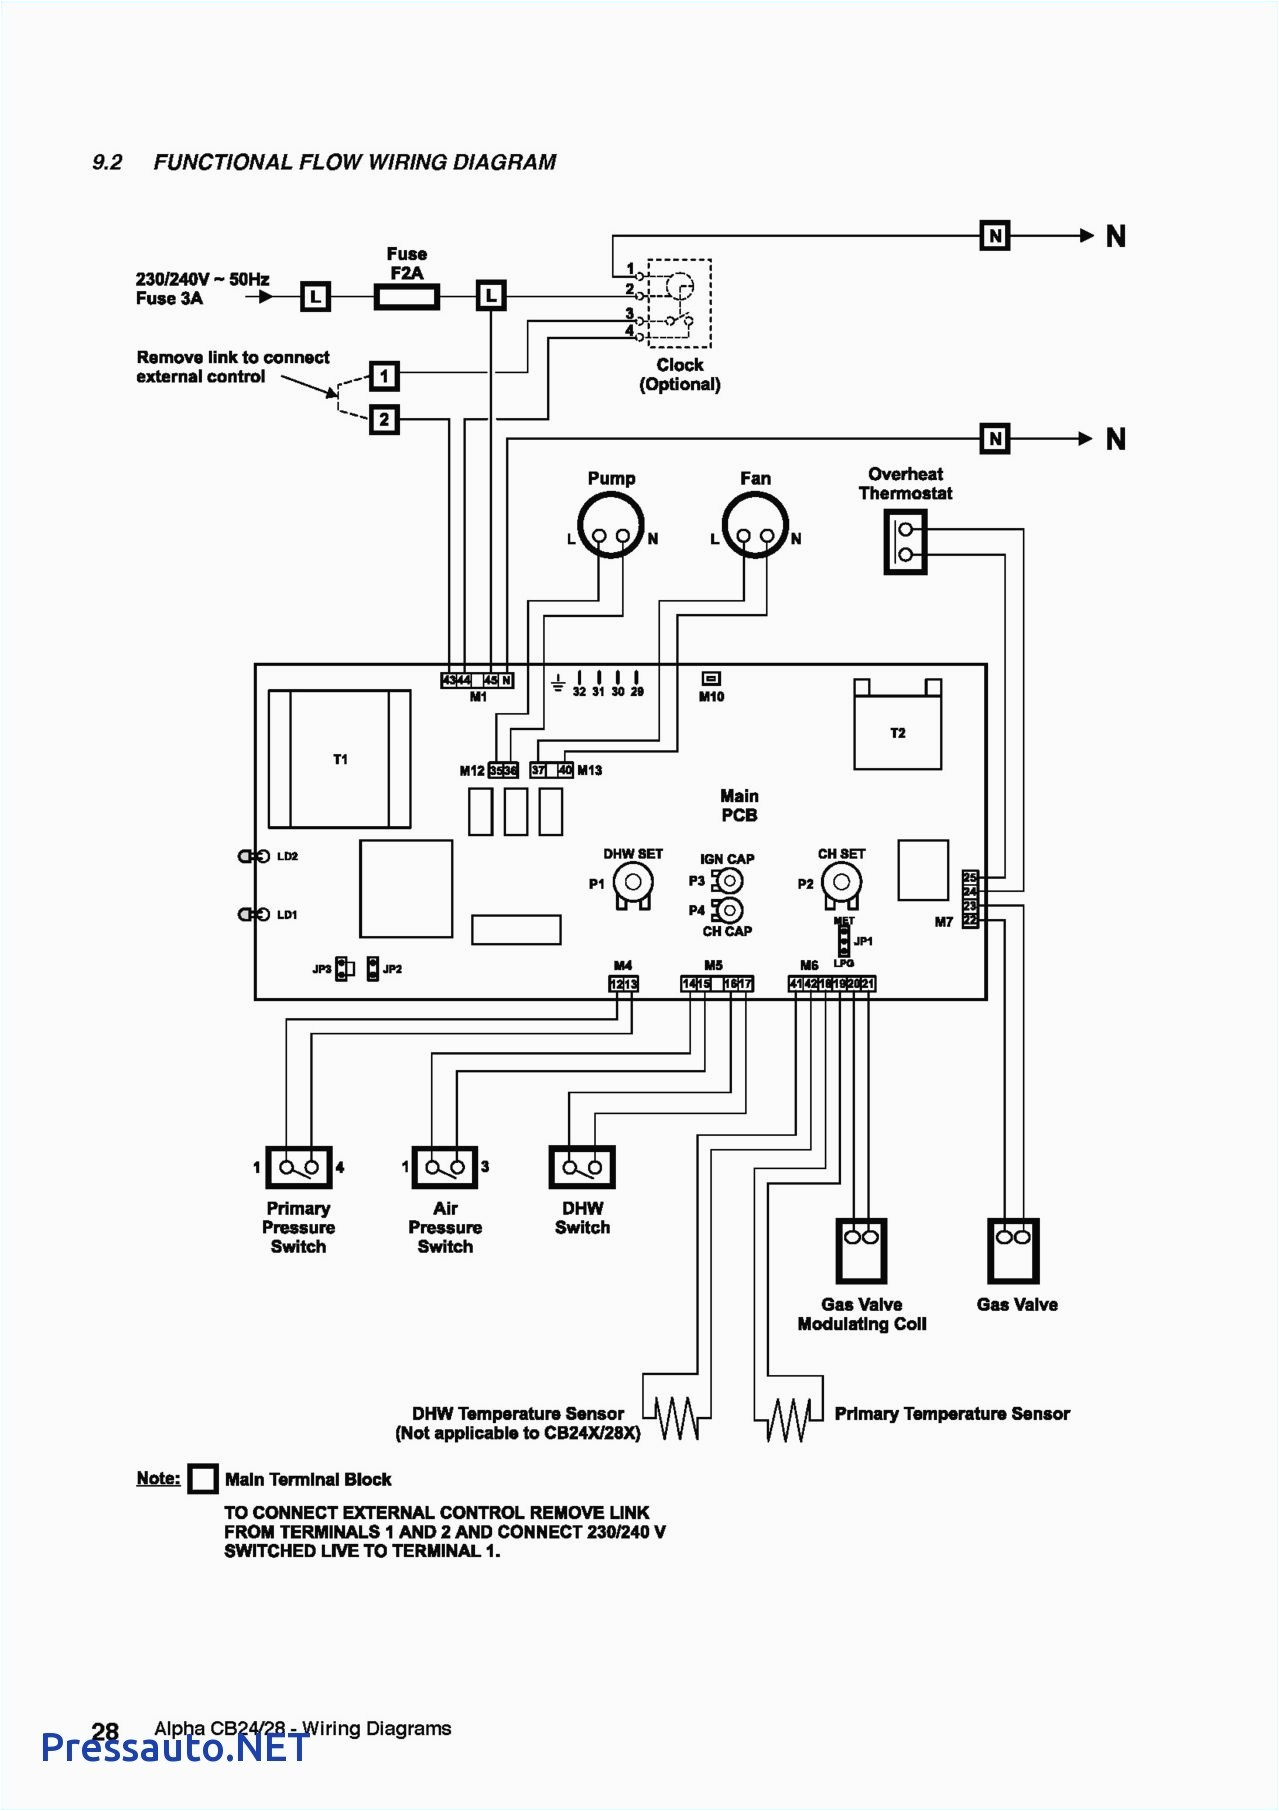 boiler control wiring diagrams